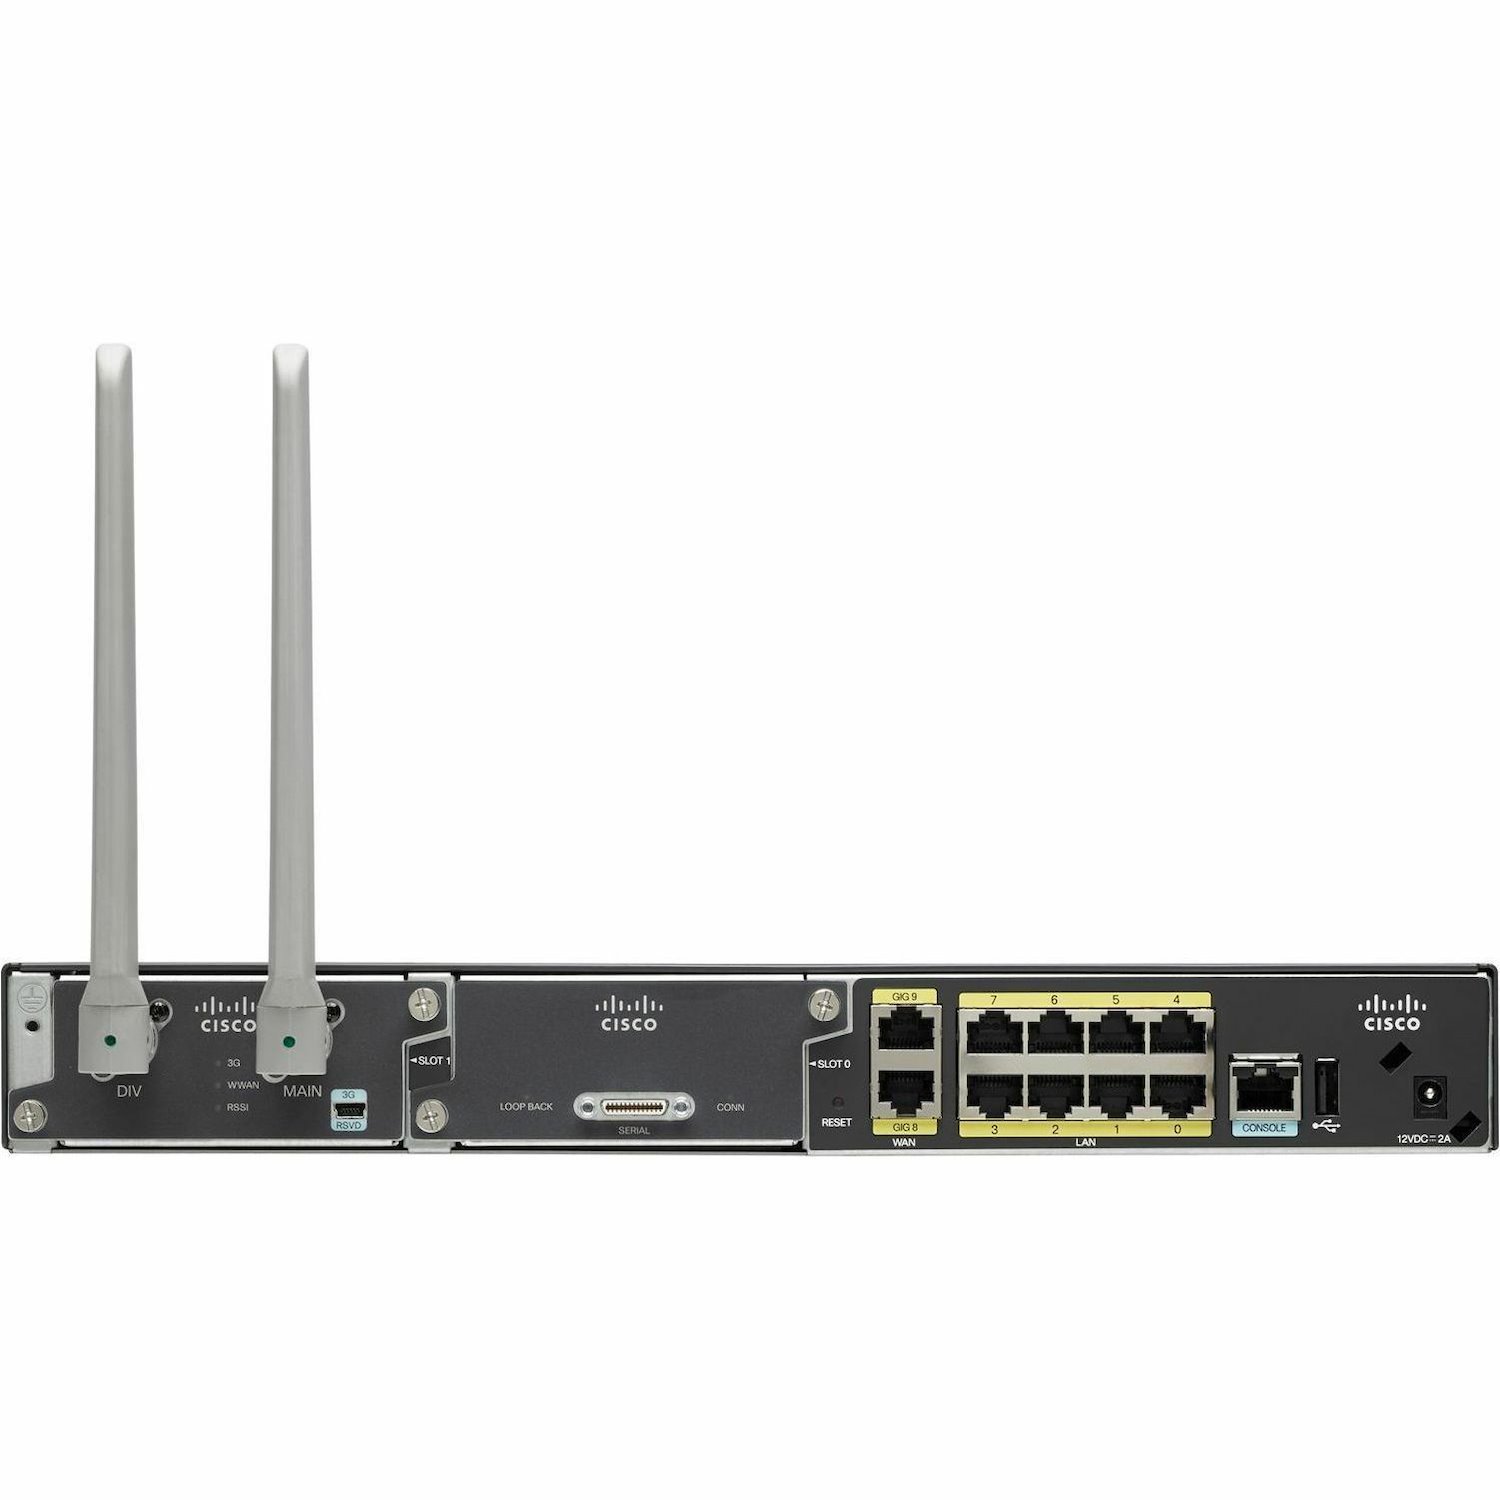 Cisco C841M-8X Router